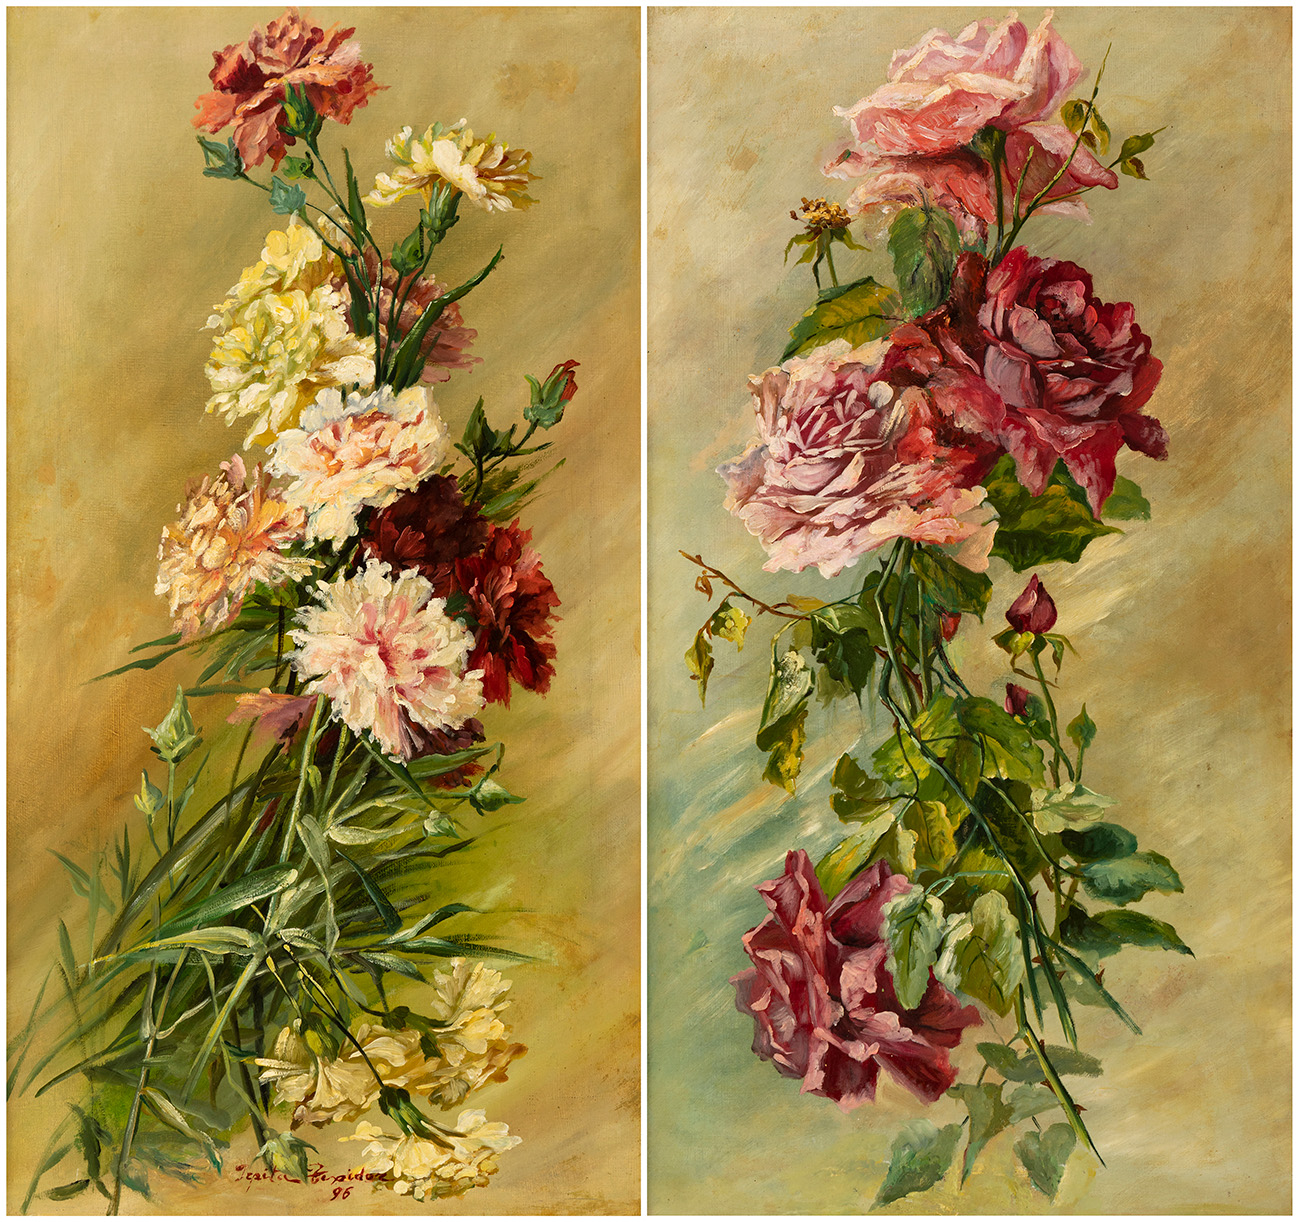 JOSEFA TEXIDOR TORRES, known as PEPITA TEXIDOR (Barcelona, 1865- 1914)"Roses and carnations",